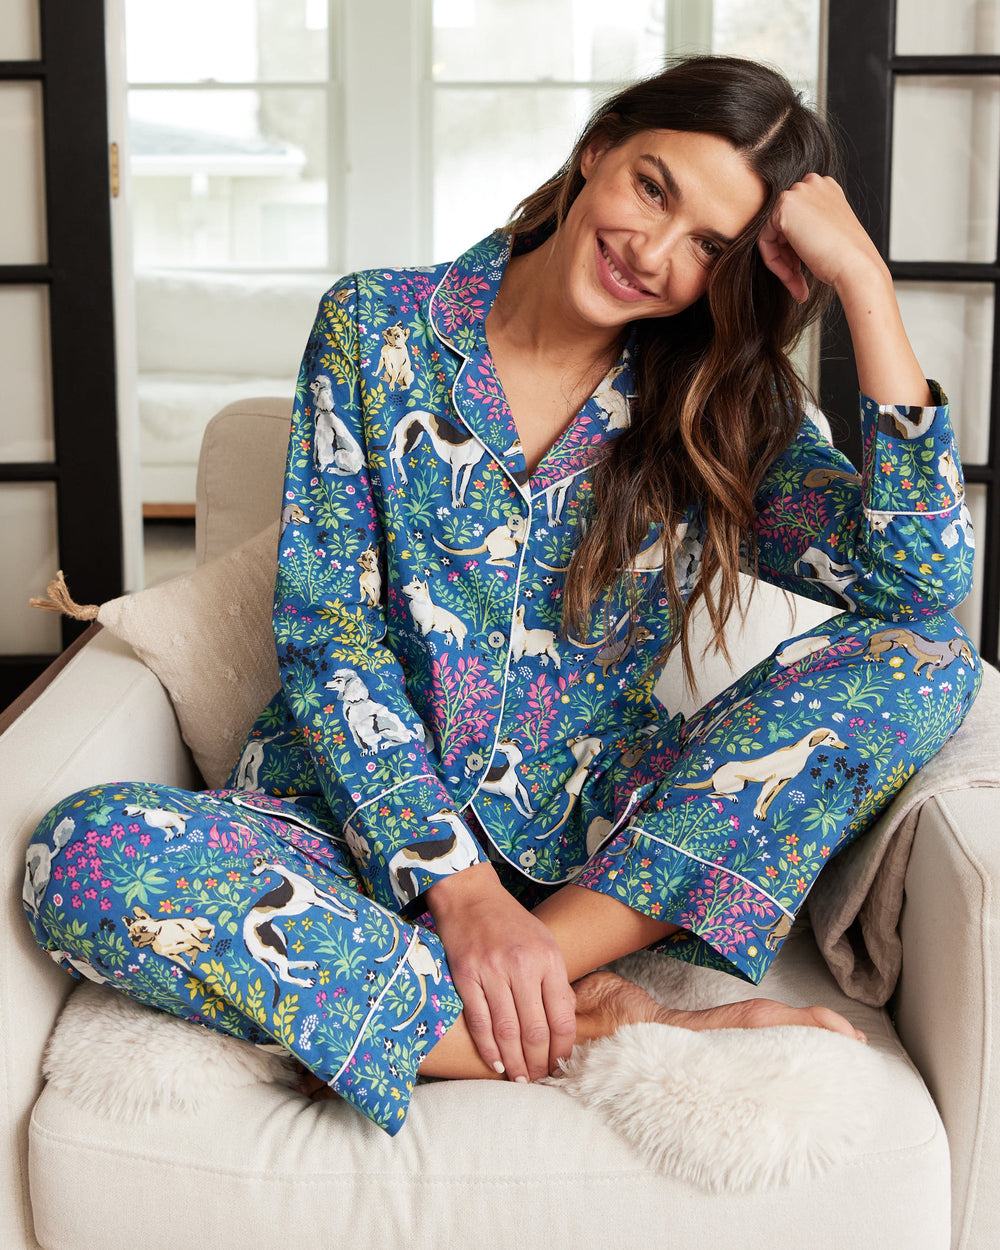 Just Love Women Pajama Pants / Sleepwear / PJs (Need to Sleep Pink, Small)  